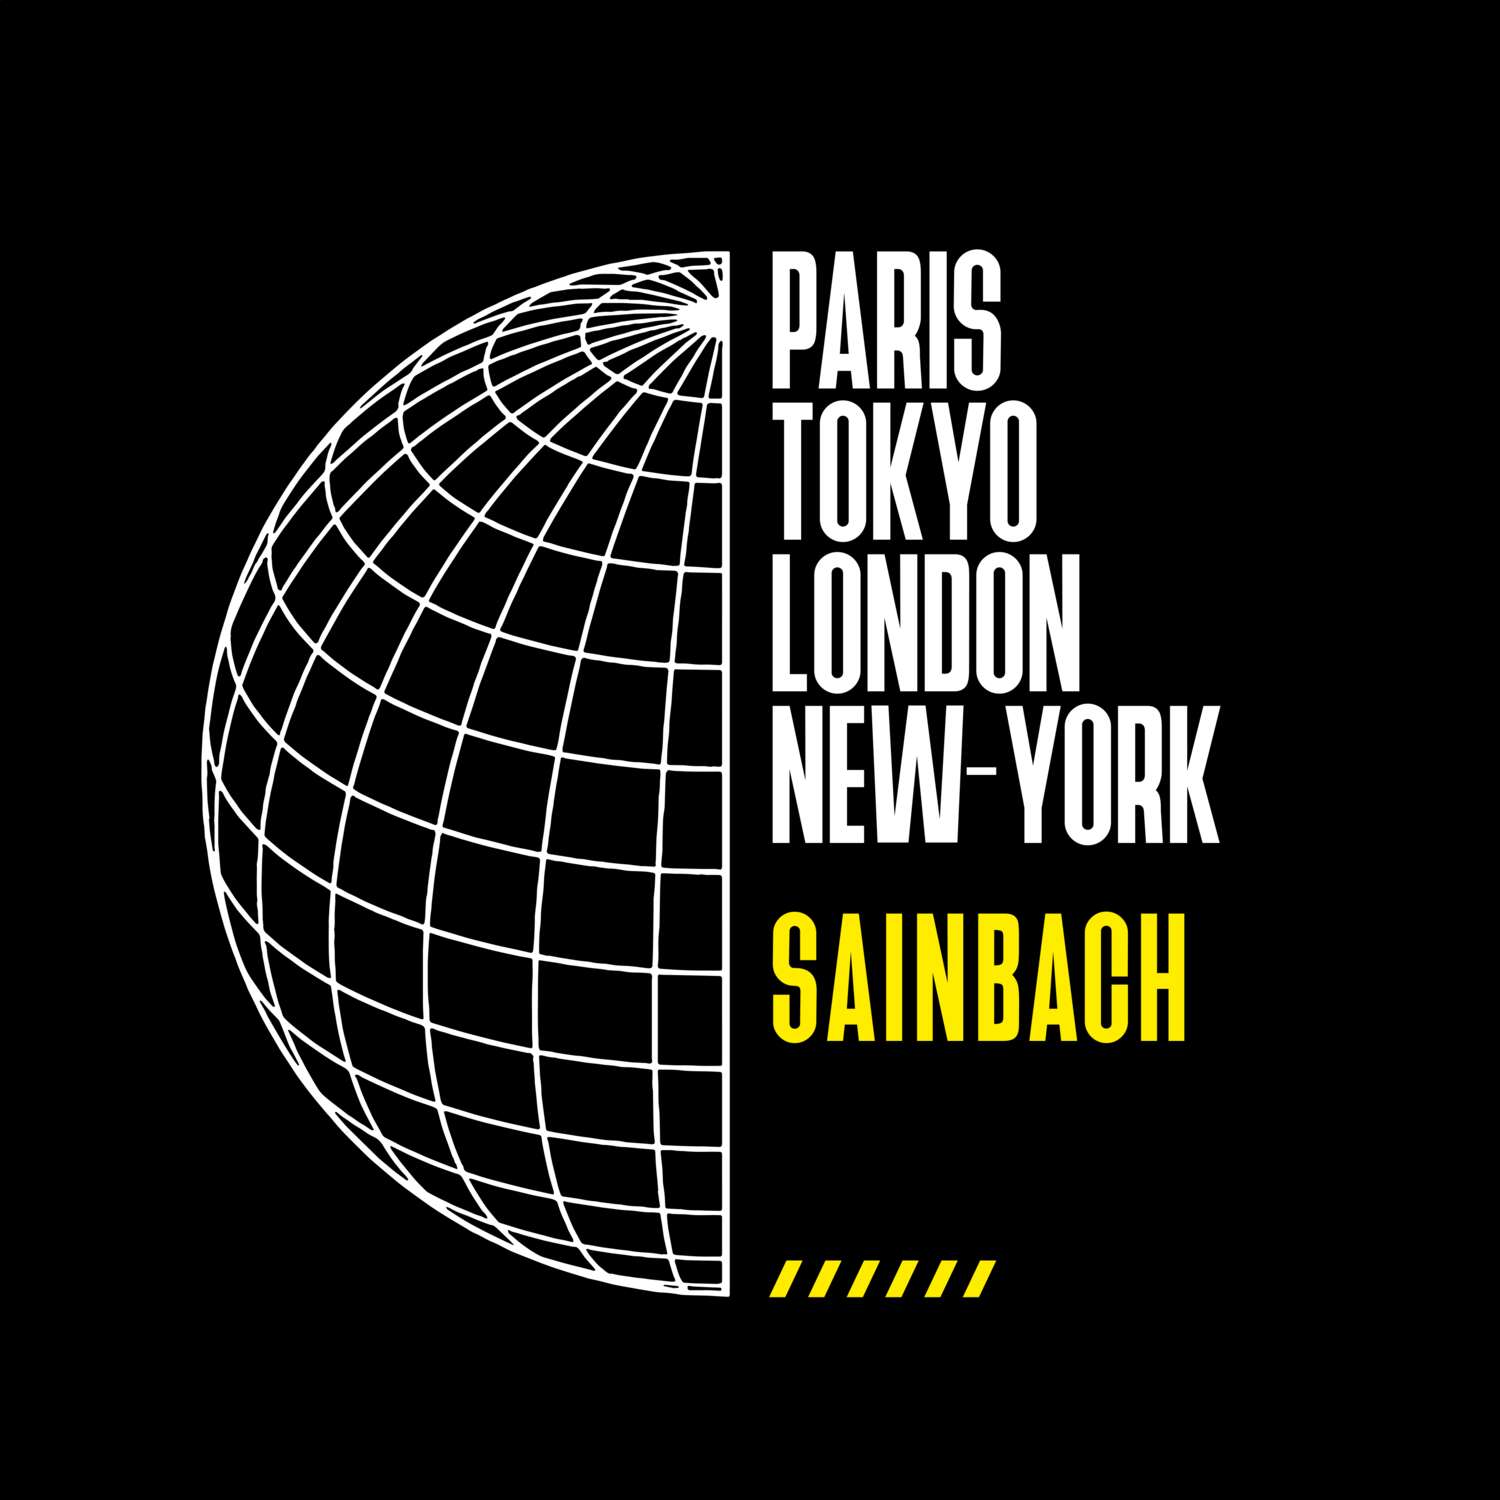 Sainbach T-Shirt »Paris Tokyo London«